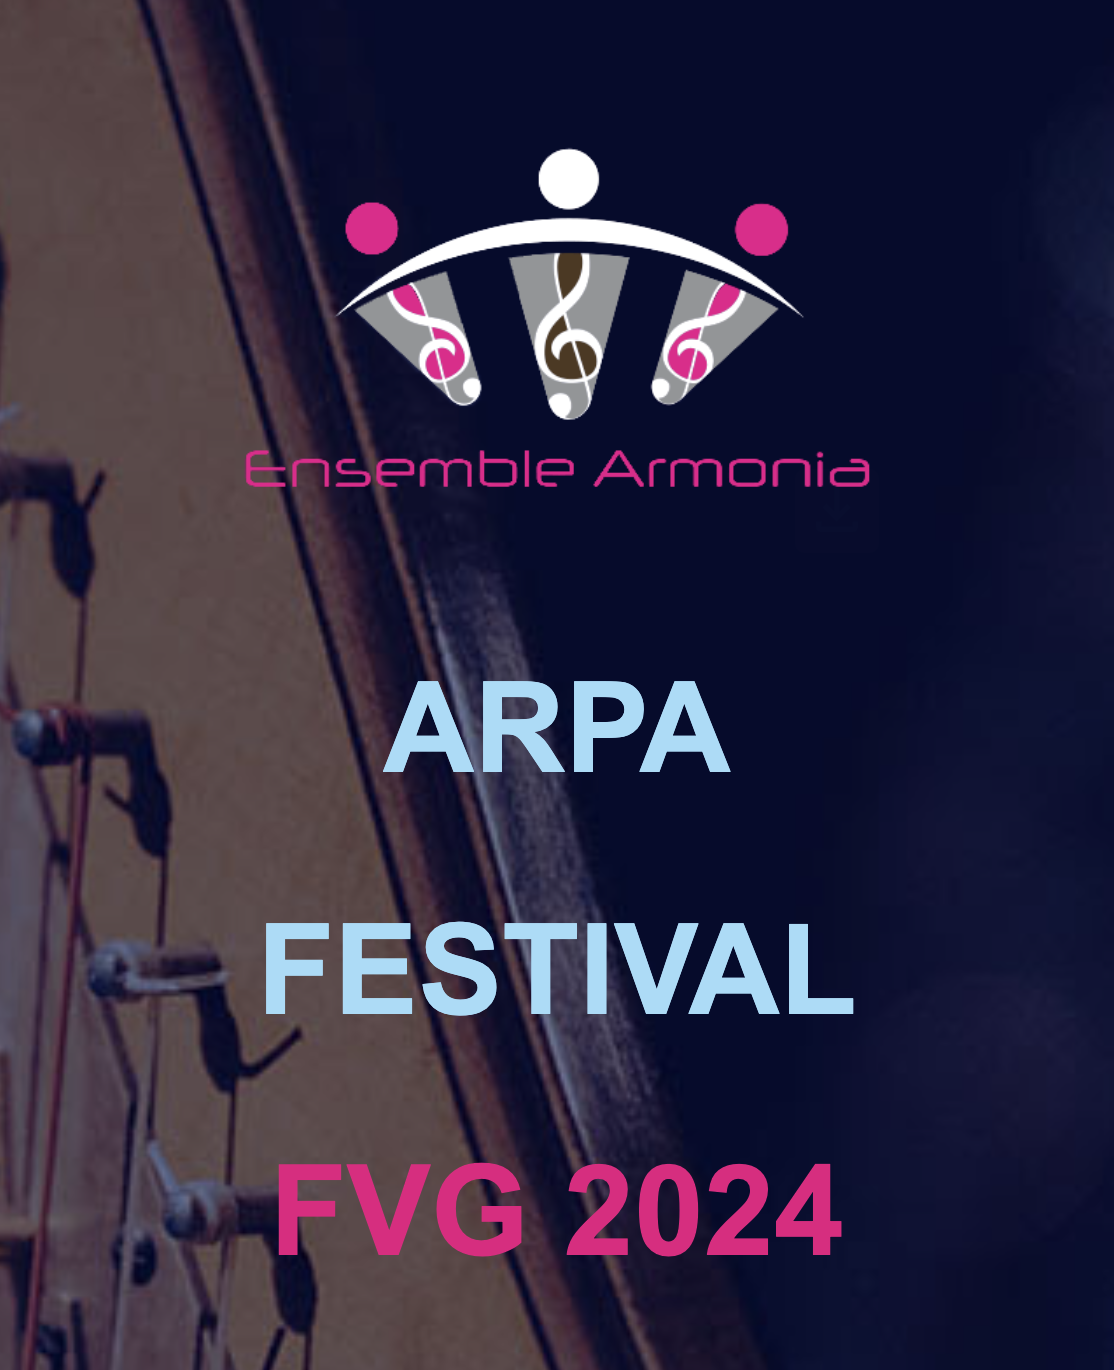 Arpa festival FVG 2024